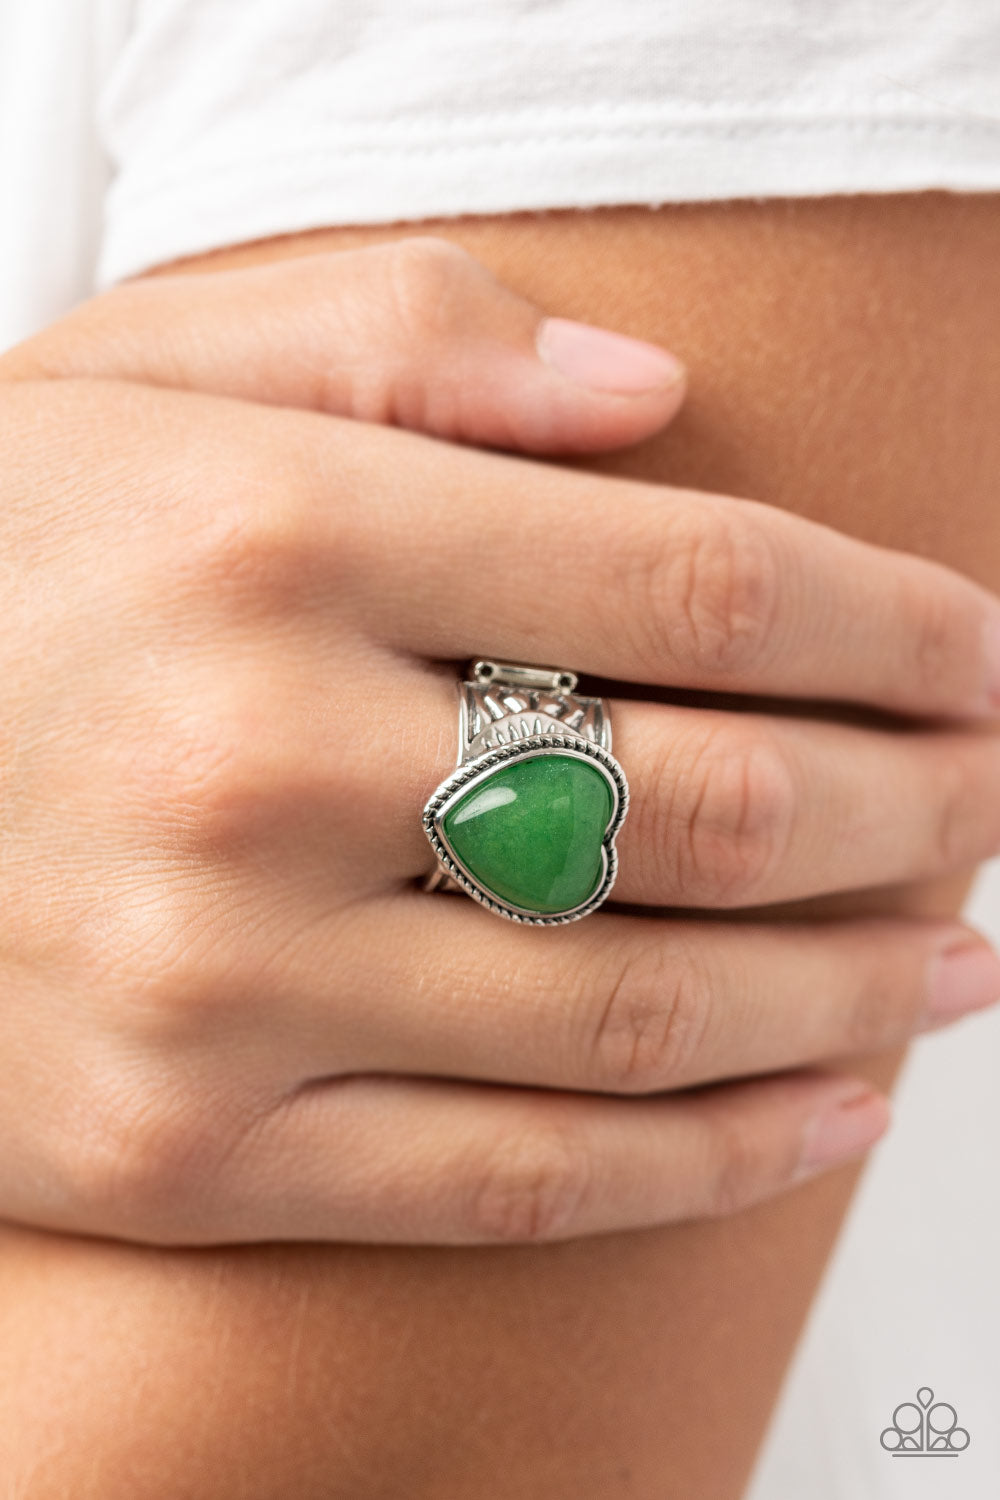 Stone Age Admirer - green - Paparazzi ring